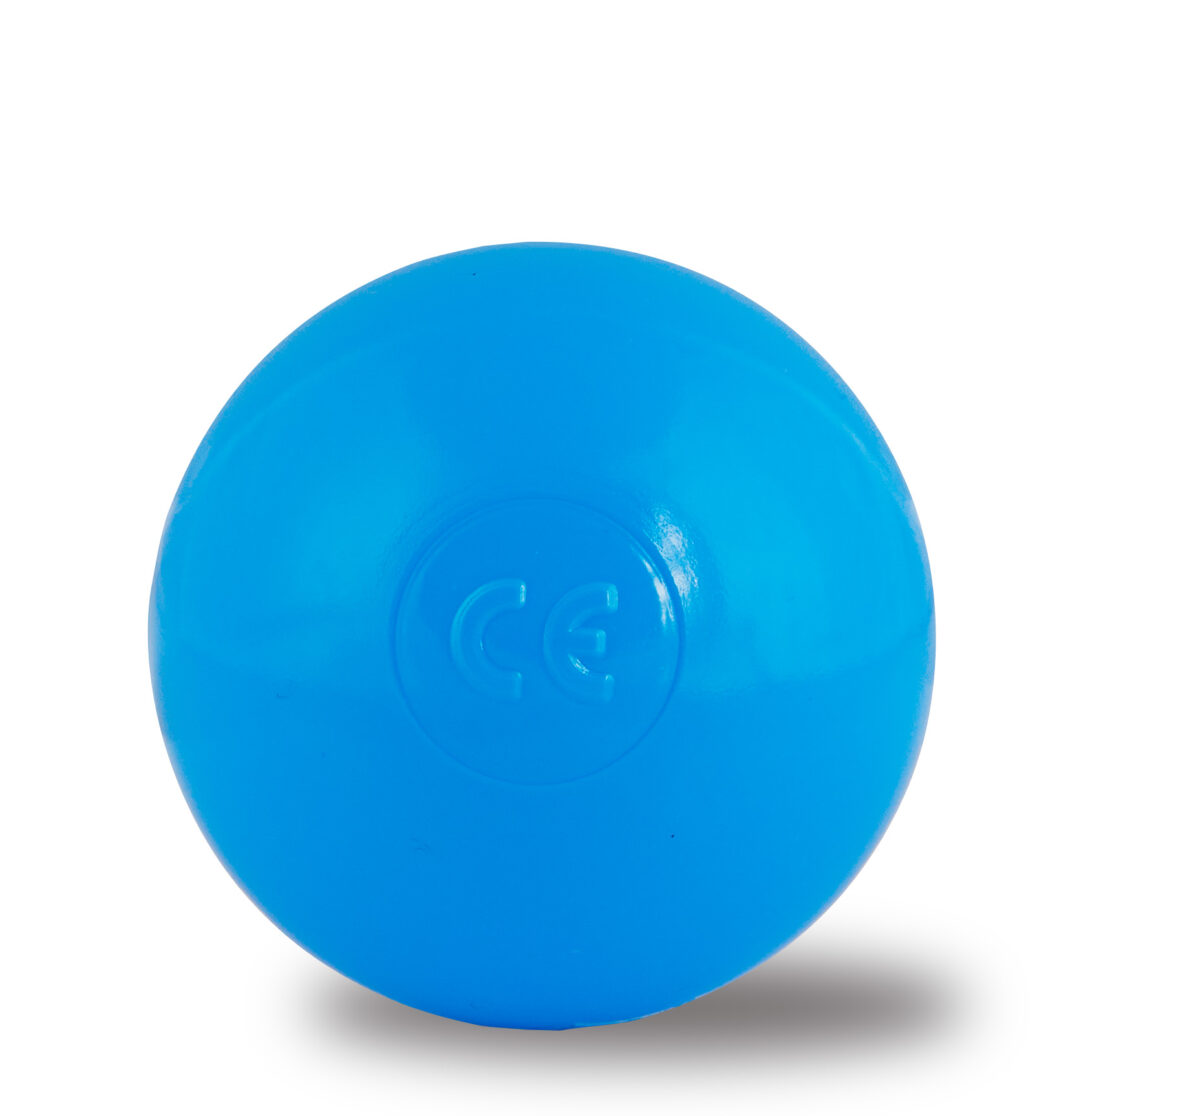 Blauwe ballenbak ballen